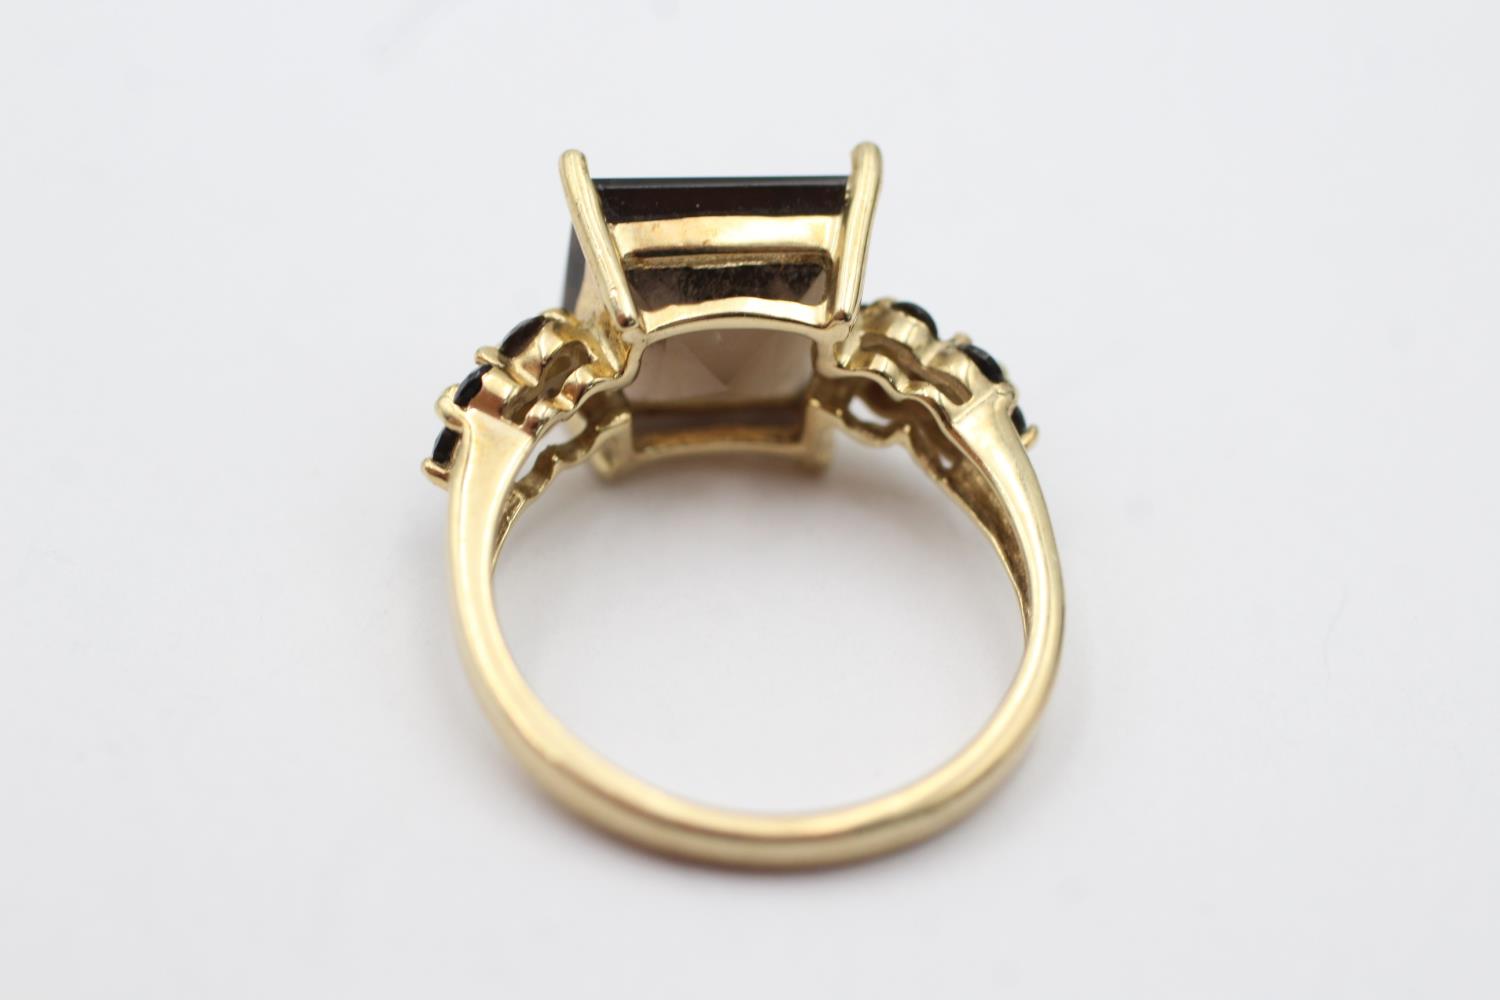 9ct gold smokey quartz dress ring (3.5g) Size O - Image 3 of 4